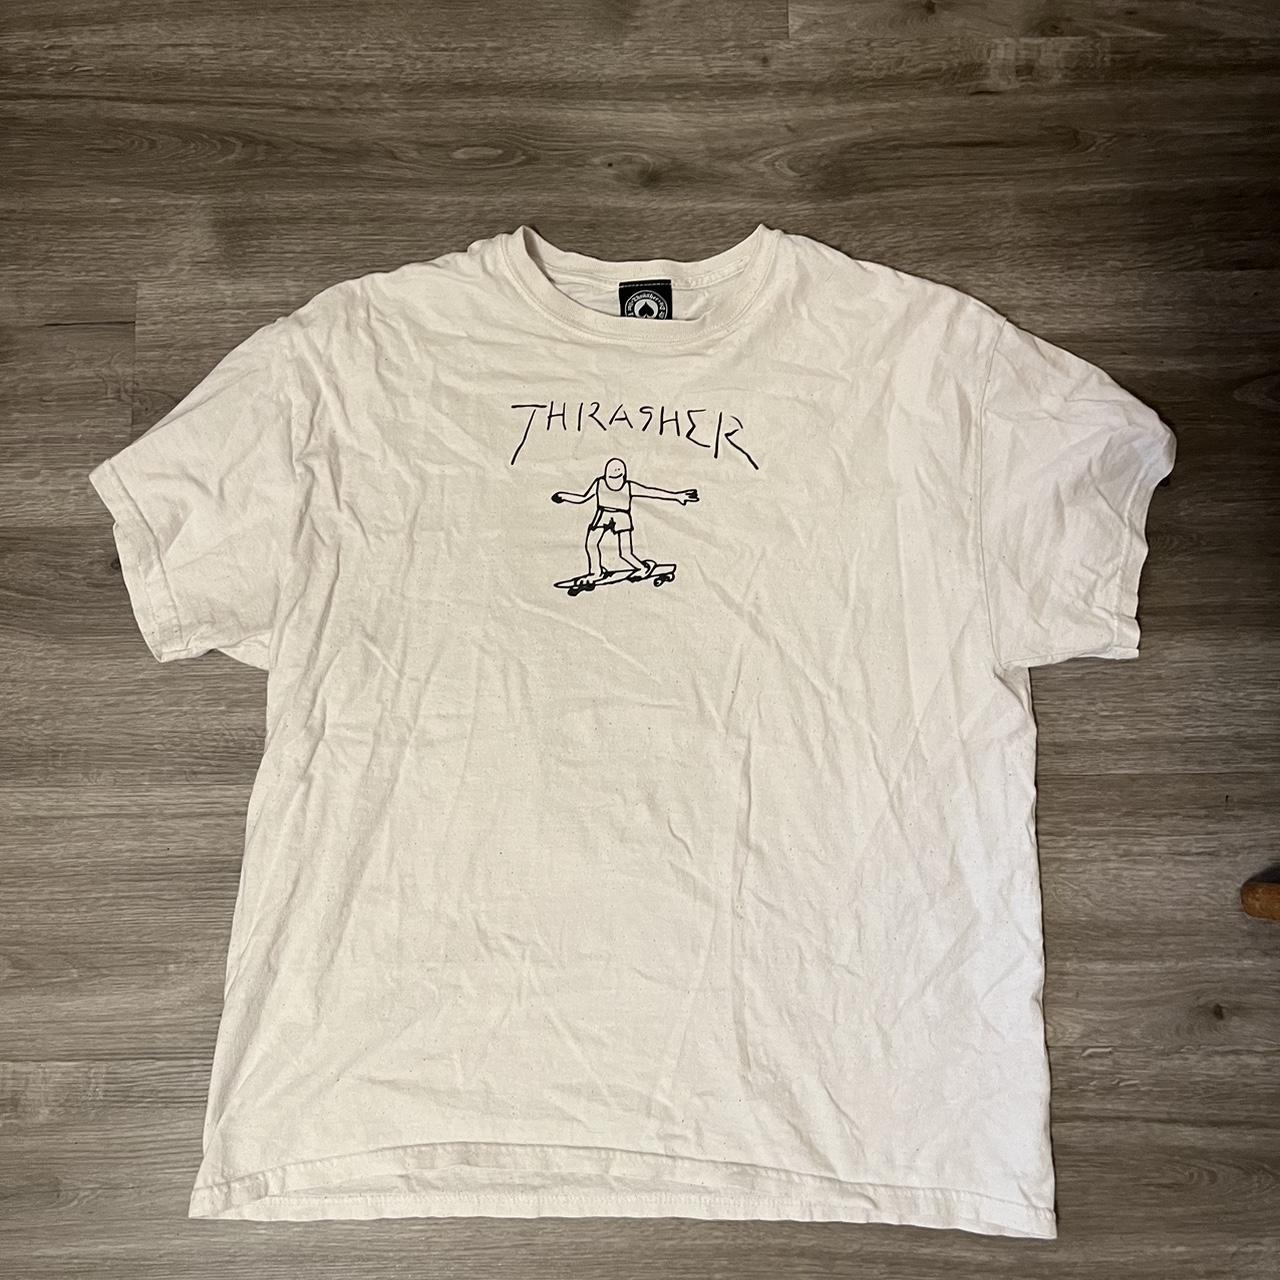 Thrasher Men's White T-shirt (2)